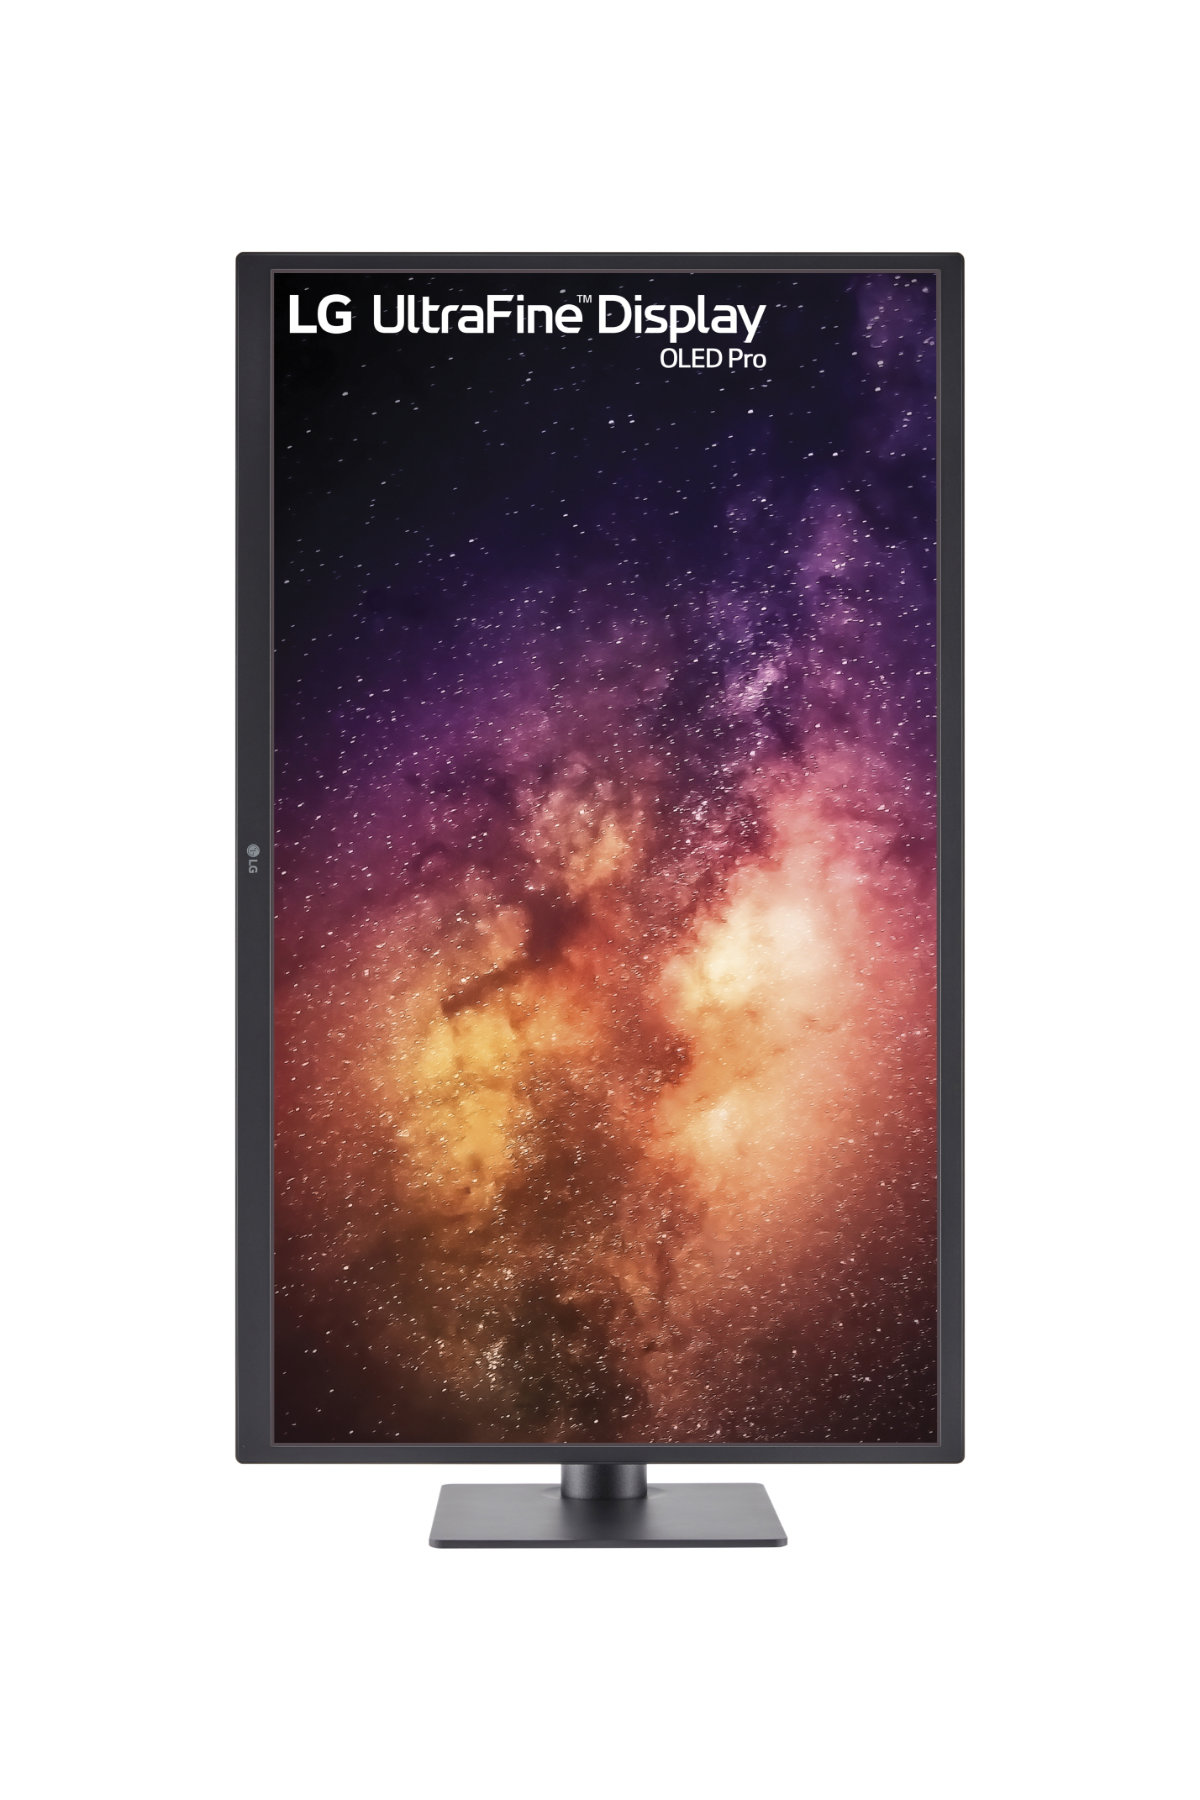 2022 LG UltraFine OLED Pro monitors